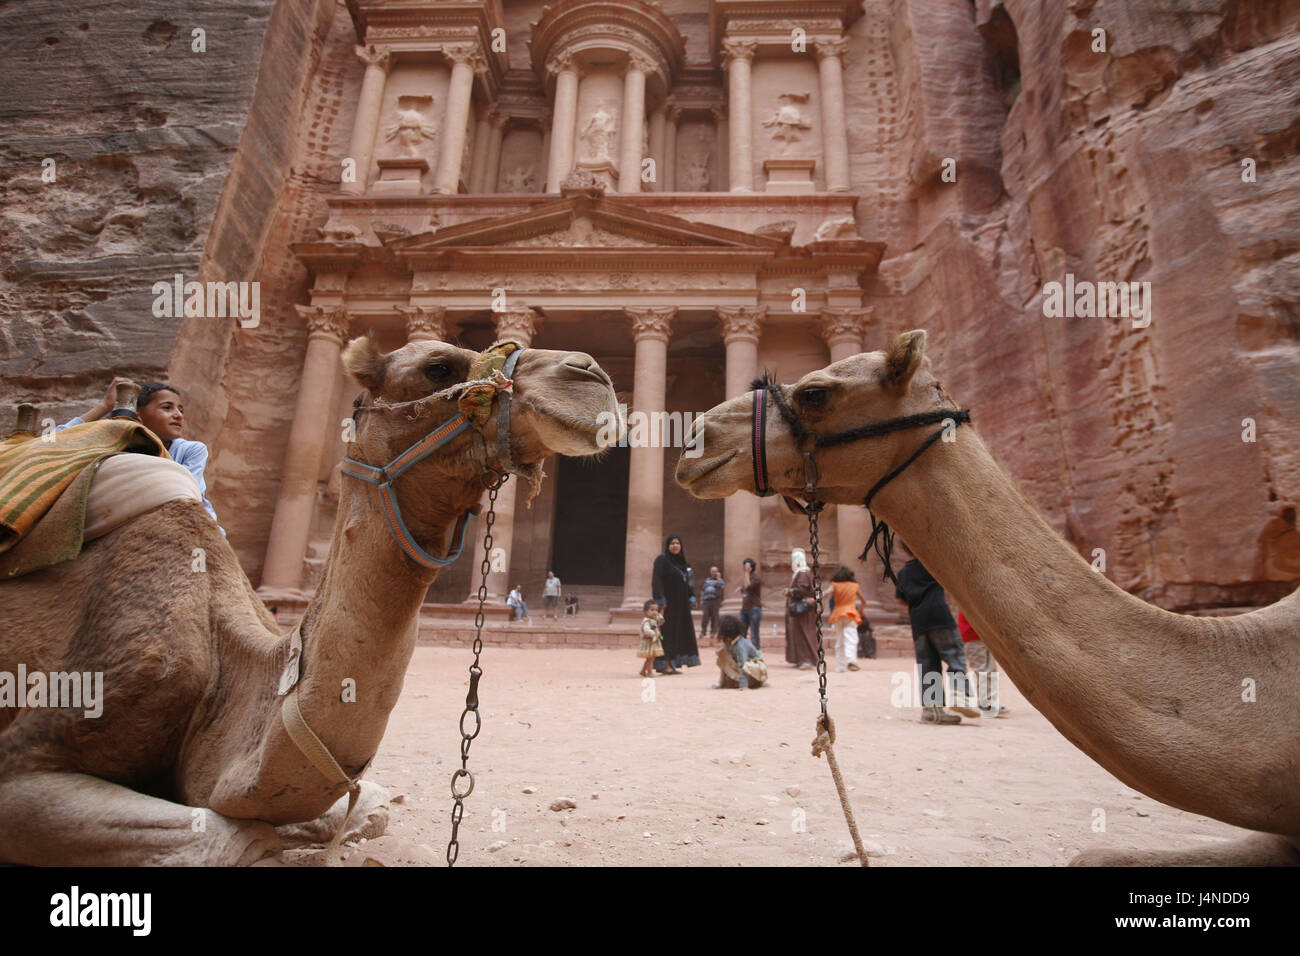 The Middle East, Jordan, Petra, treasure house, tourist, camels, Stock Photo